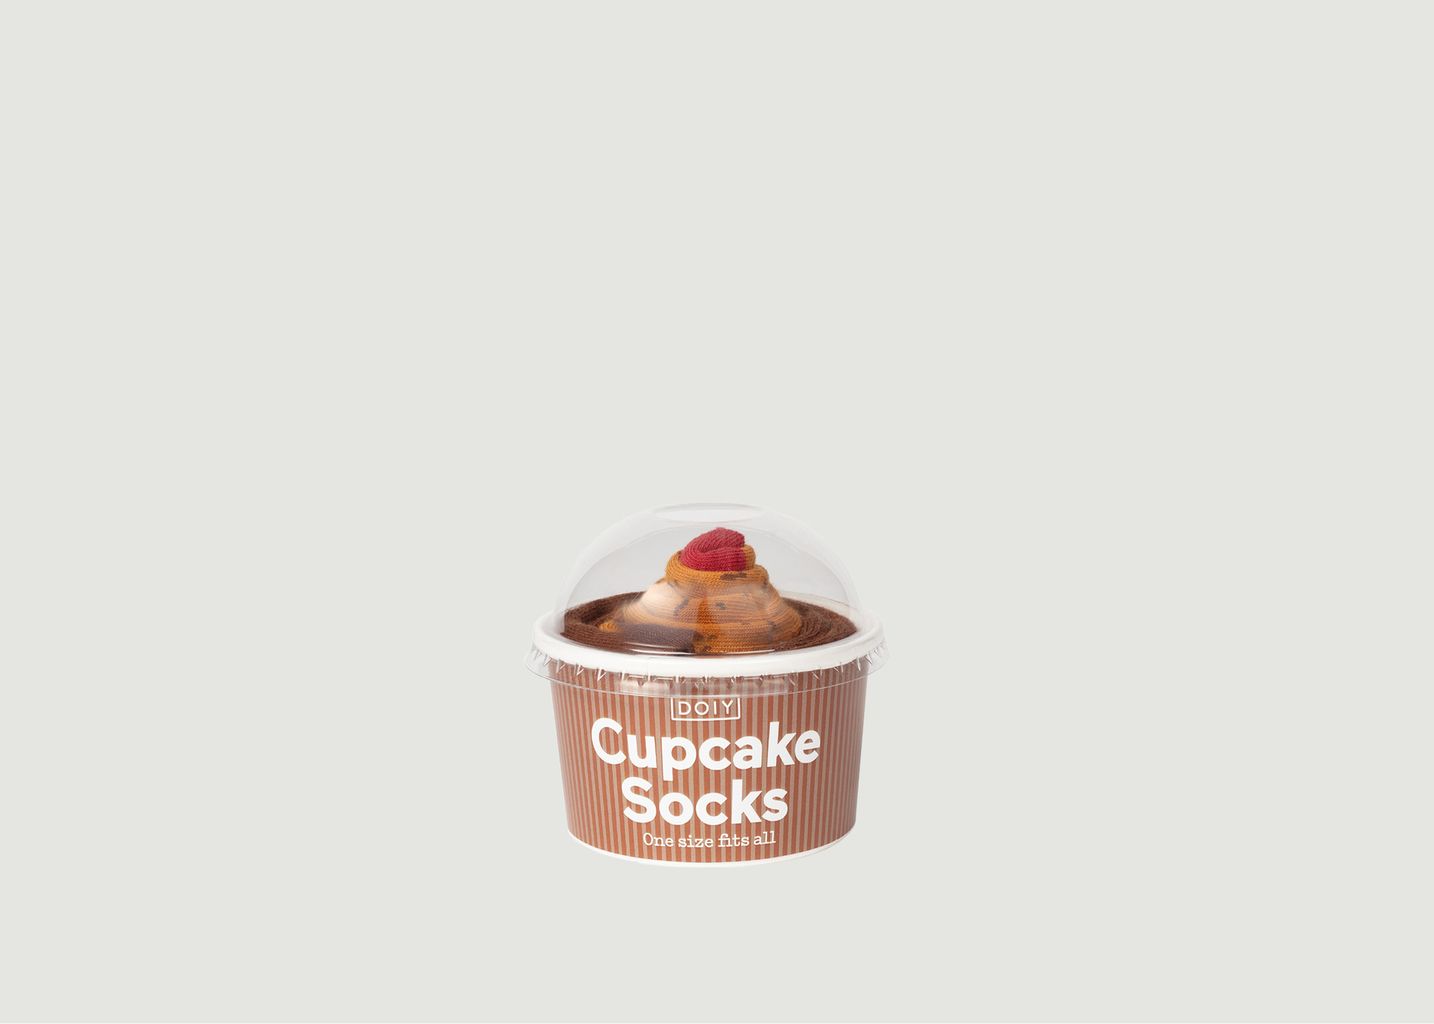 DOIY Design Cupcake Chocolate Socks